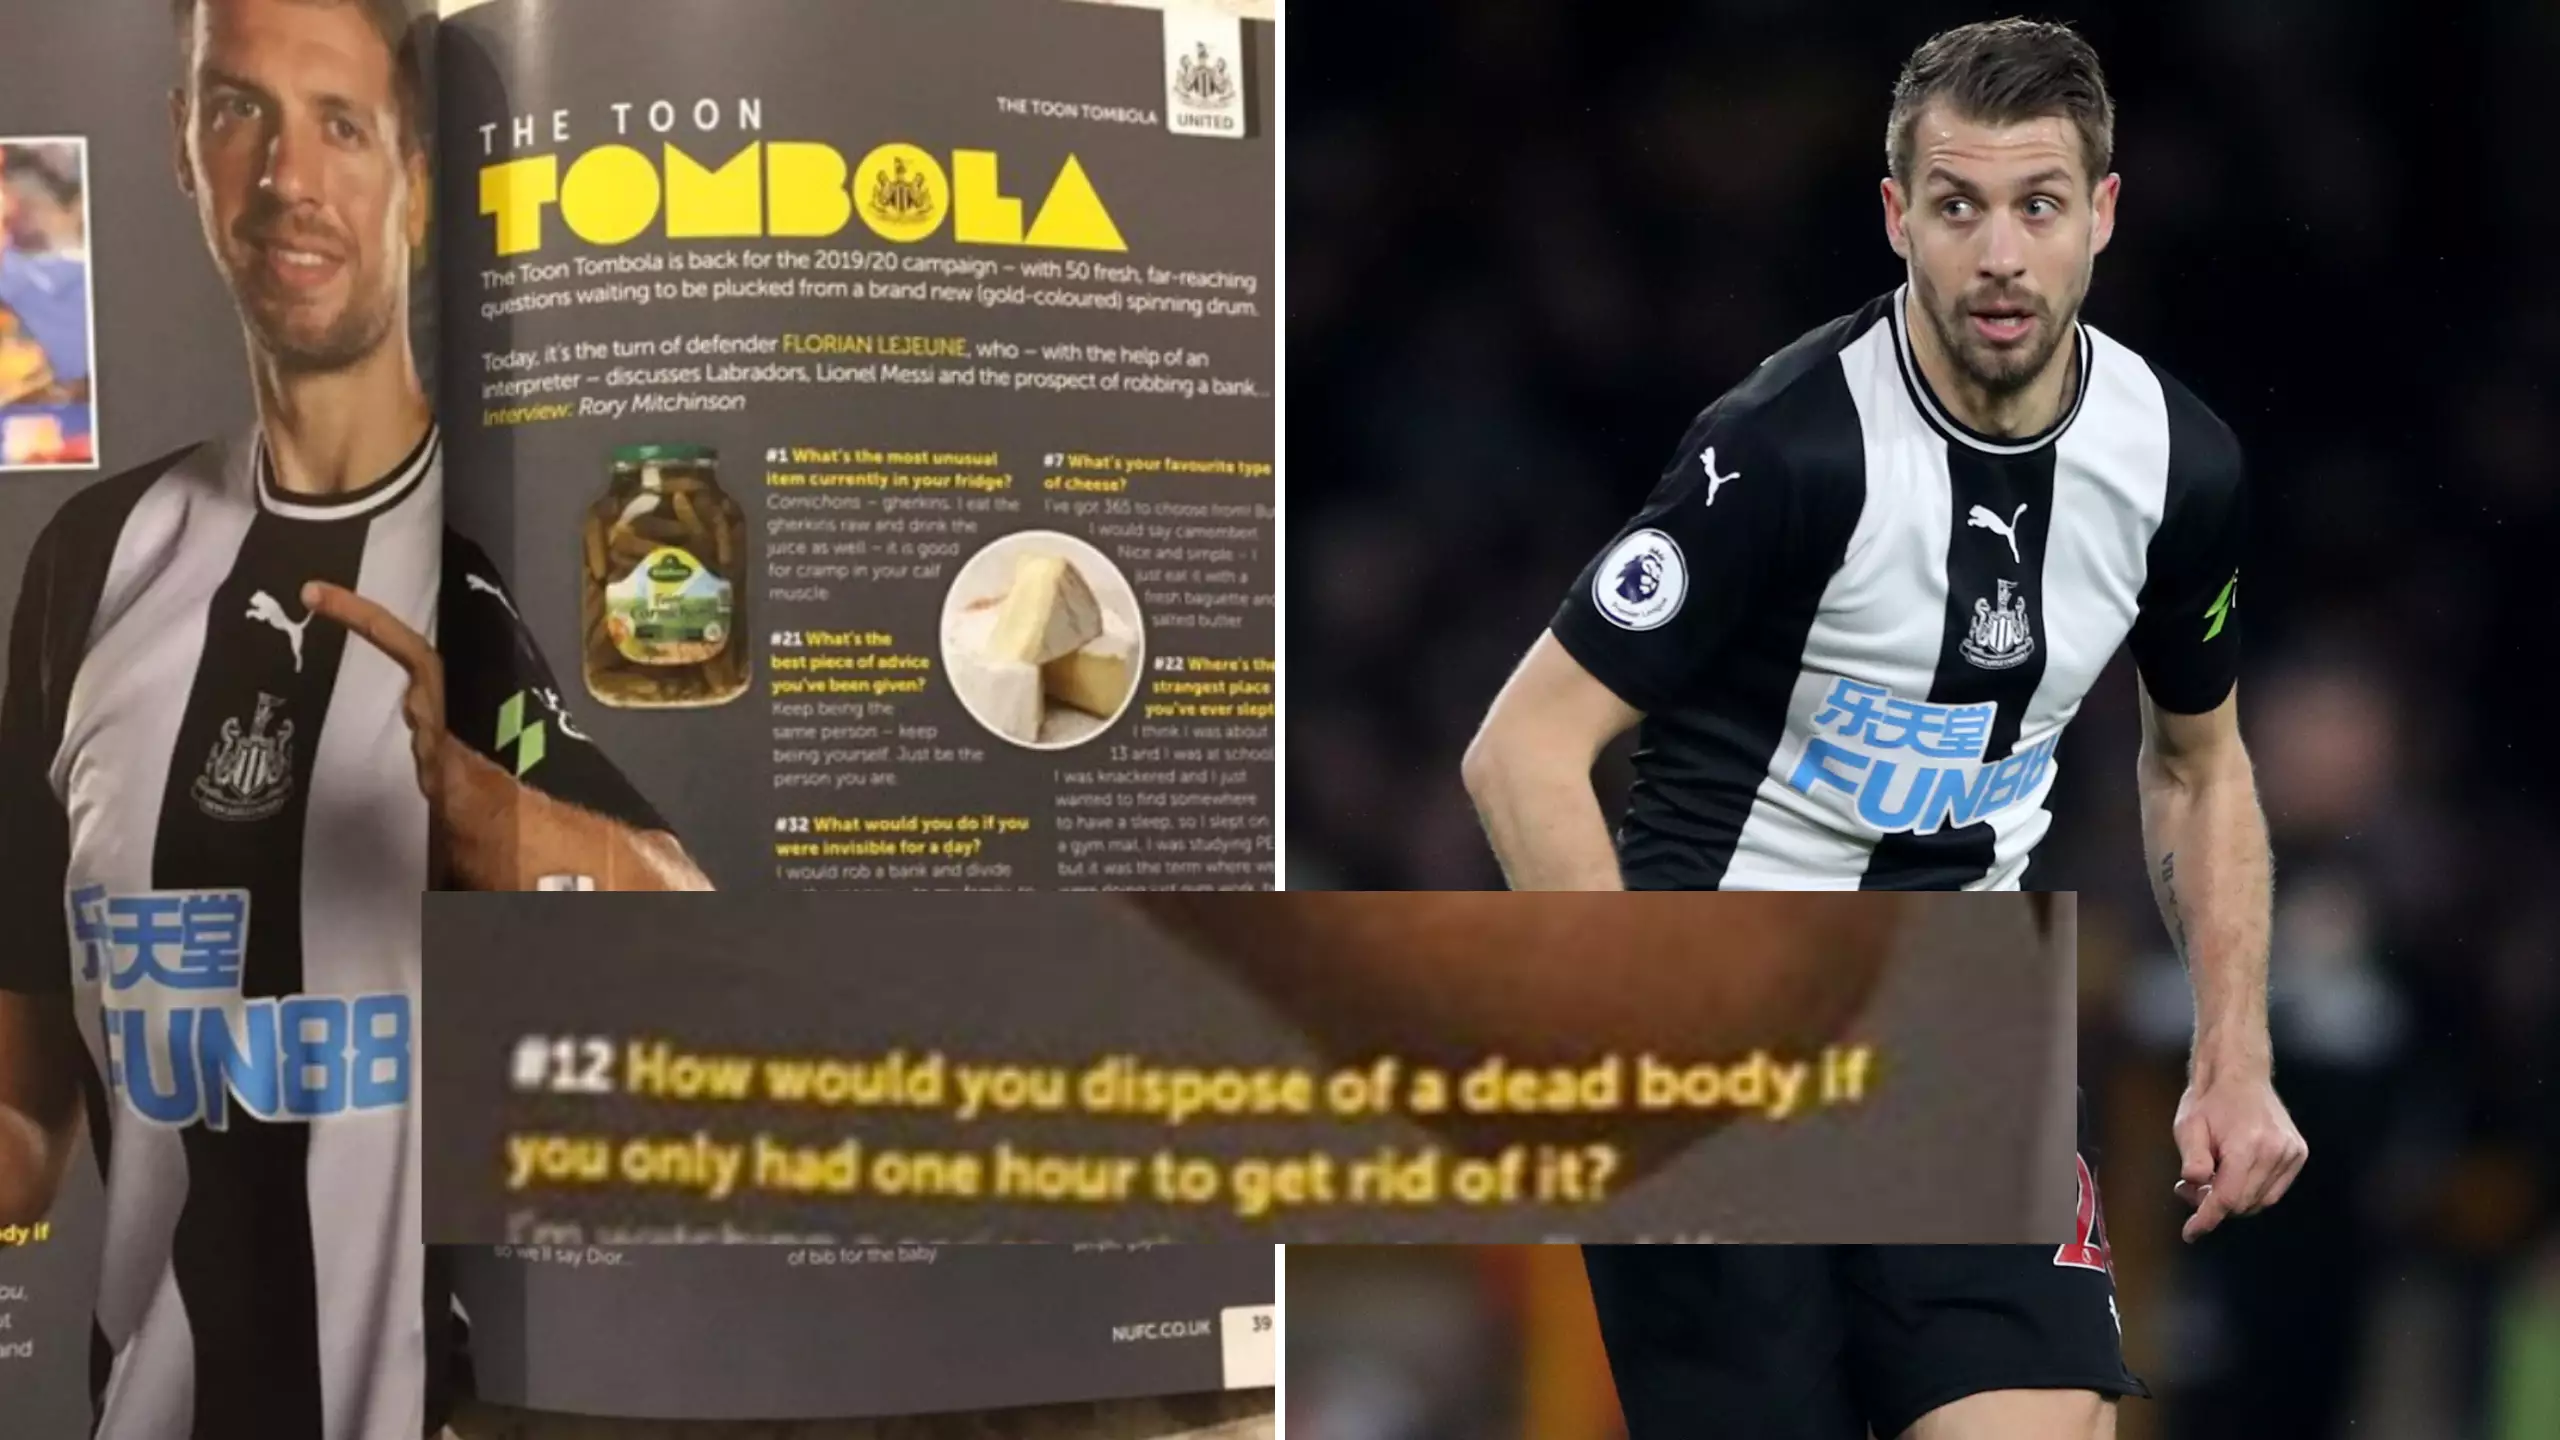 Newcastle Defender Florian Lejeune Bizarrely Reveals How He'd Dispose Of A Dead Body